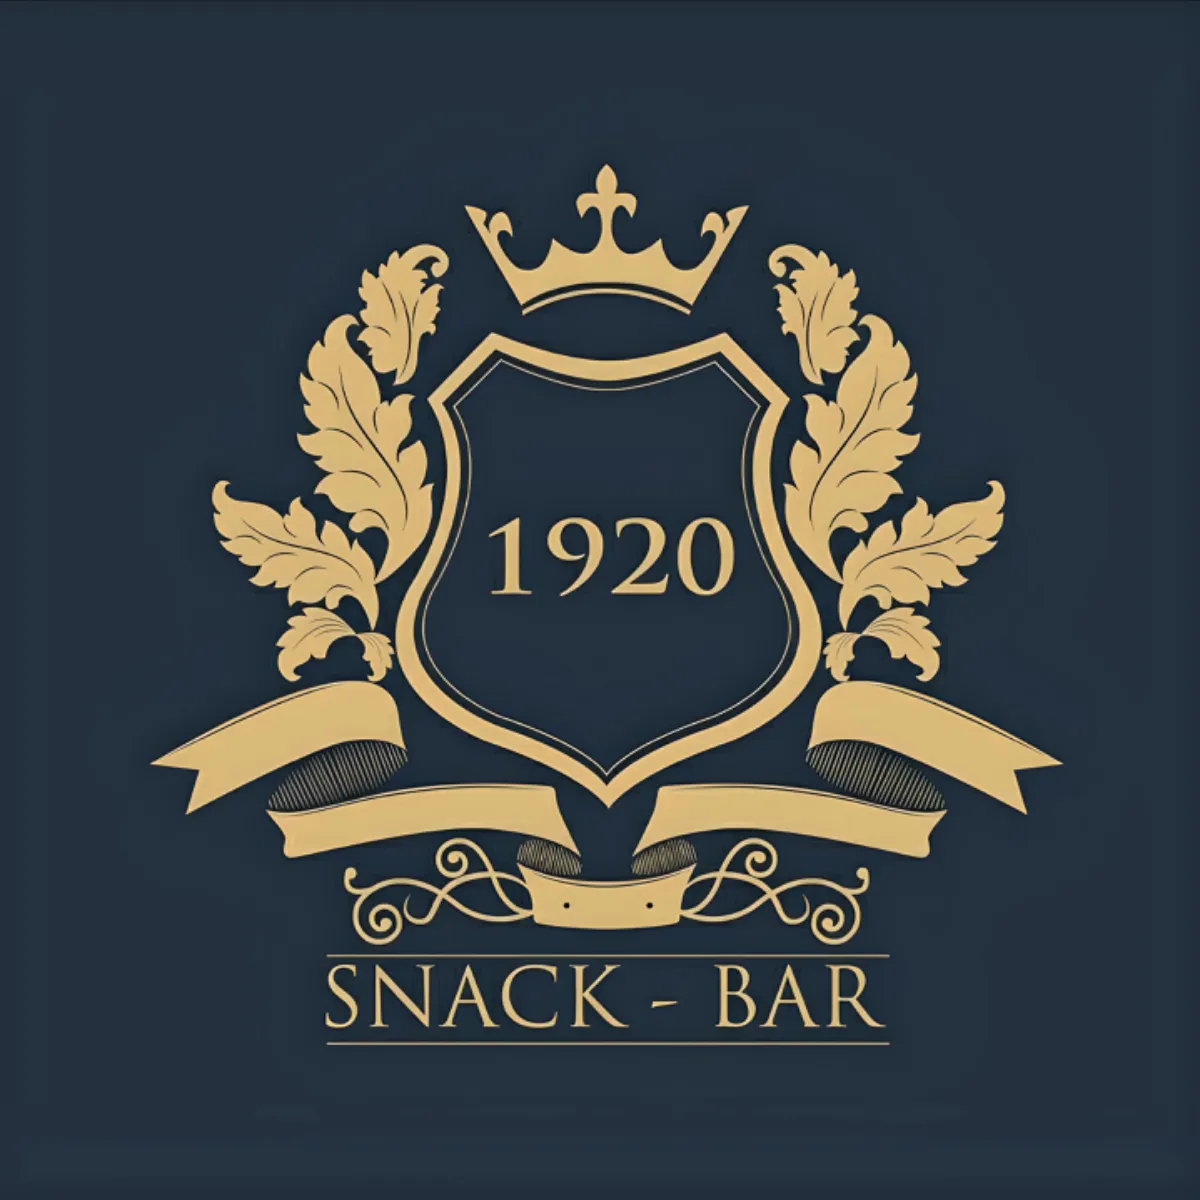 Snack Bar 1920